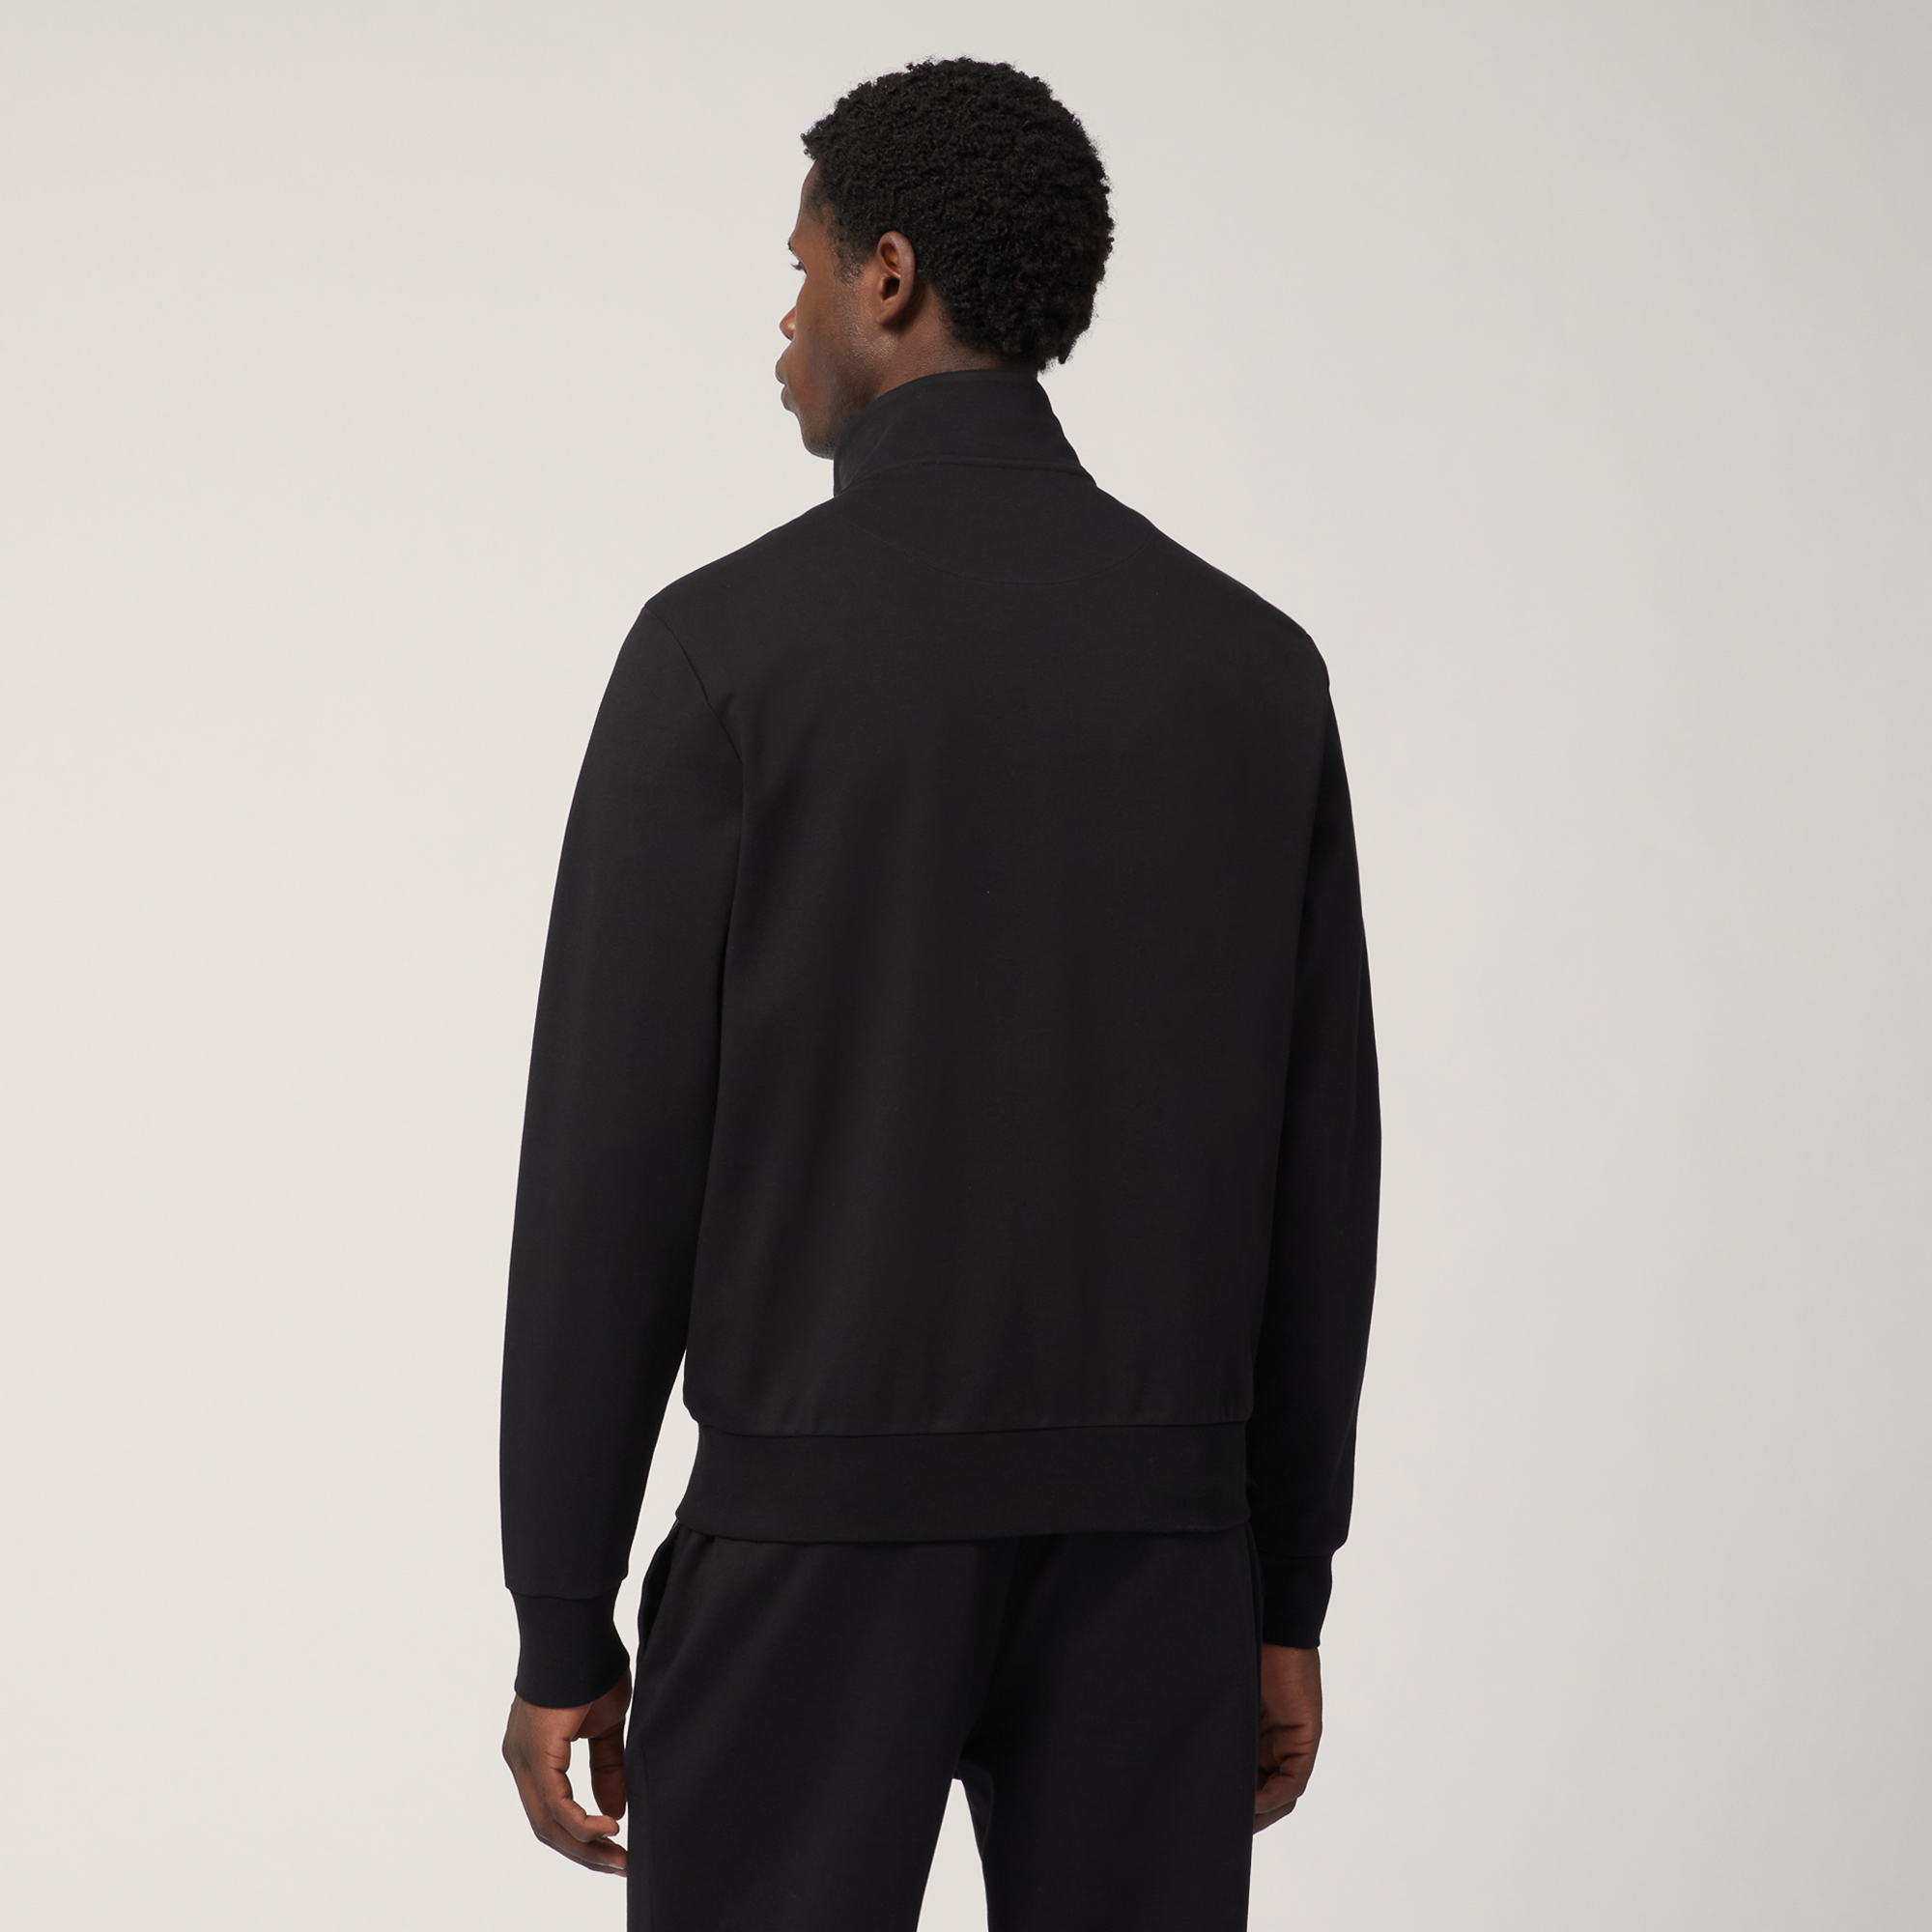 Cotton Full-Zip Sweatshirt with Heat-Sealed Details, Black, large image number 1